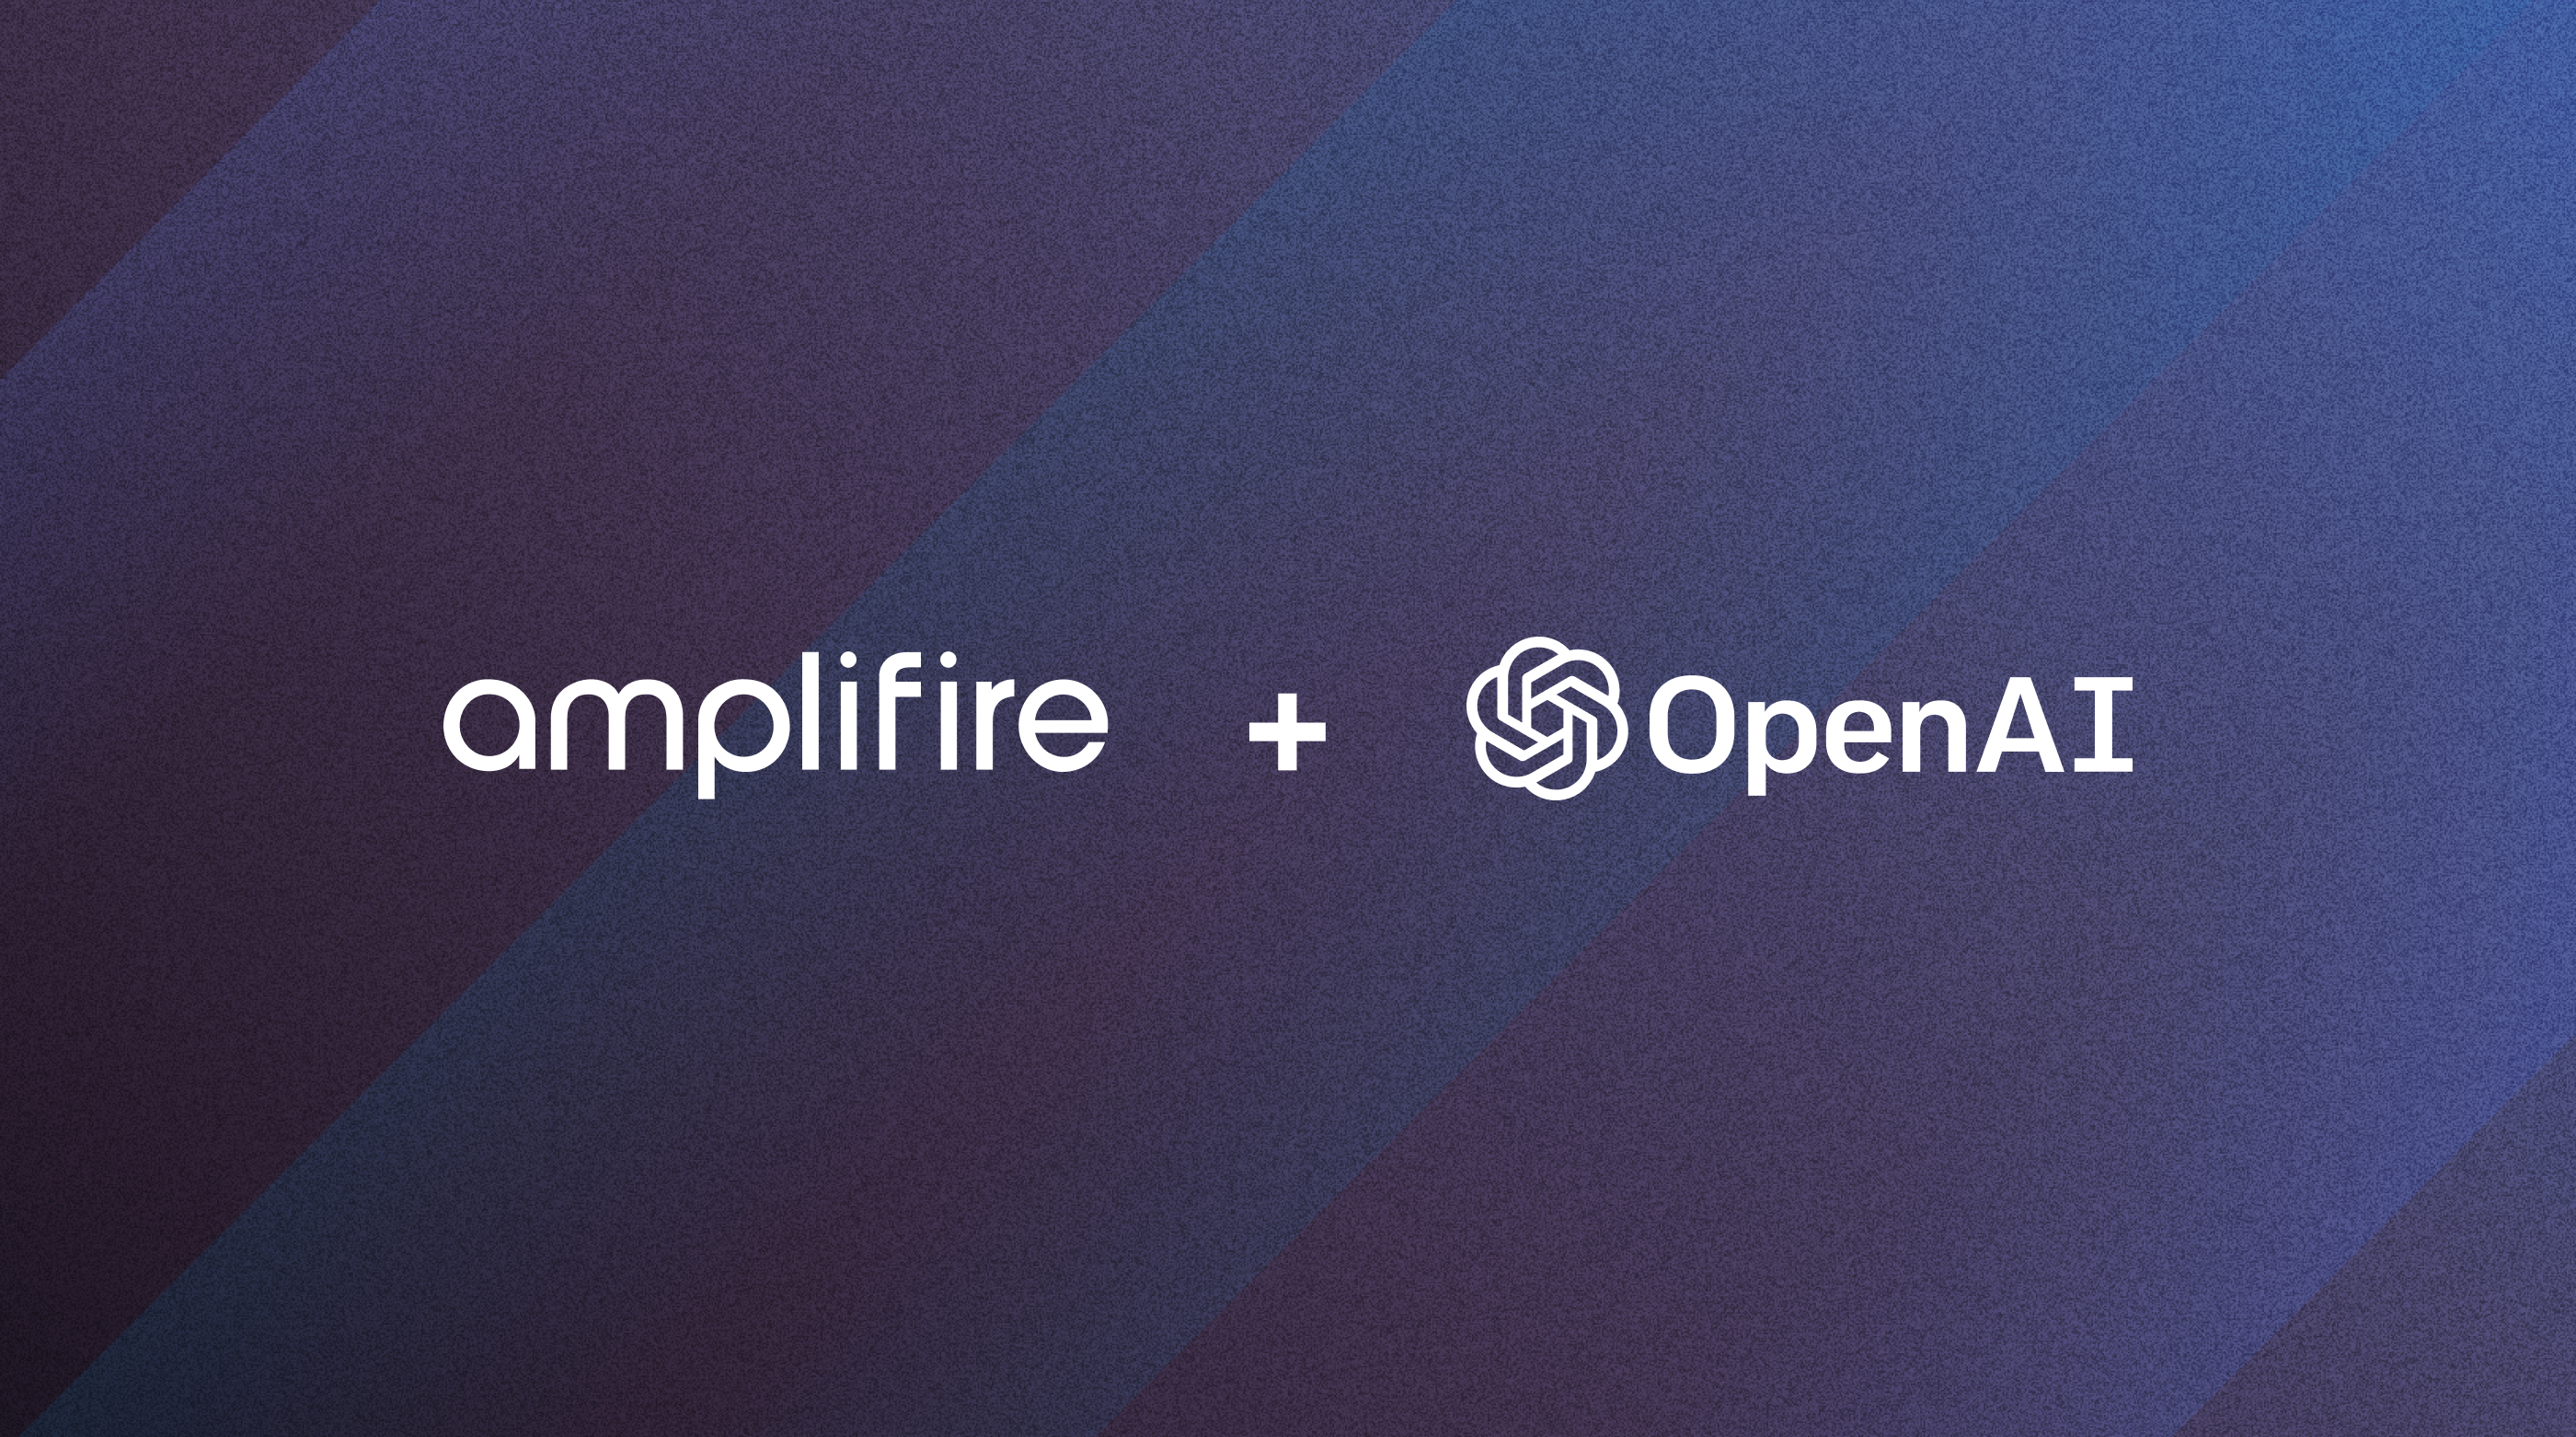 Amplifire and OpenAI logos